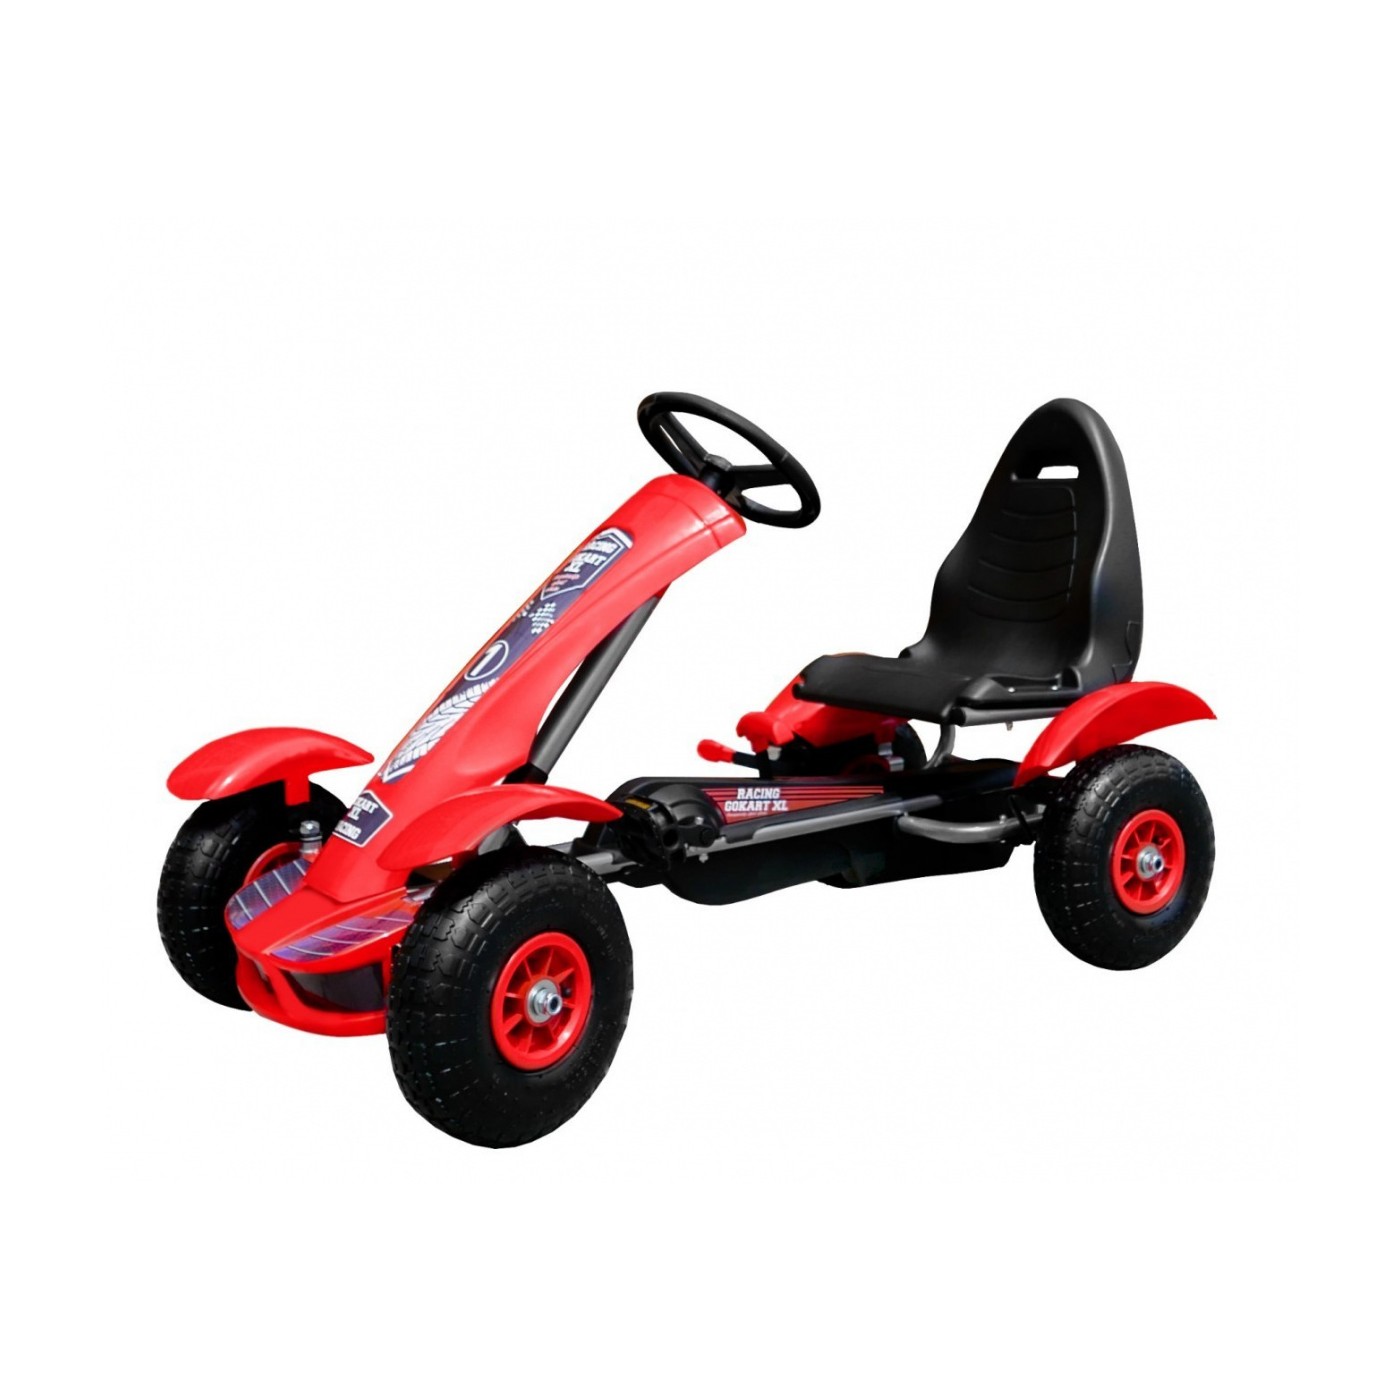 Large Go-Kart Pumped Red Wheels